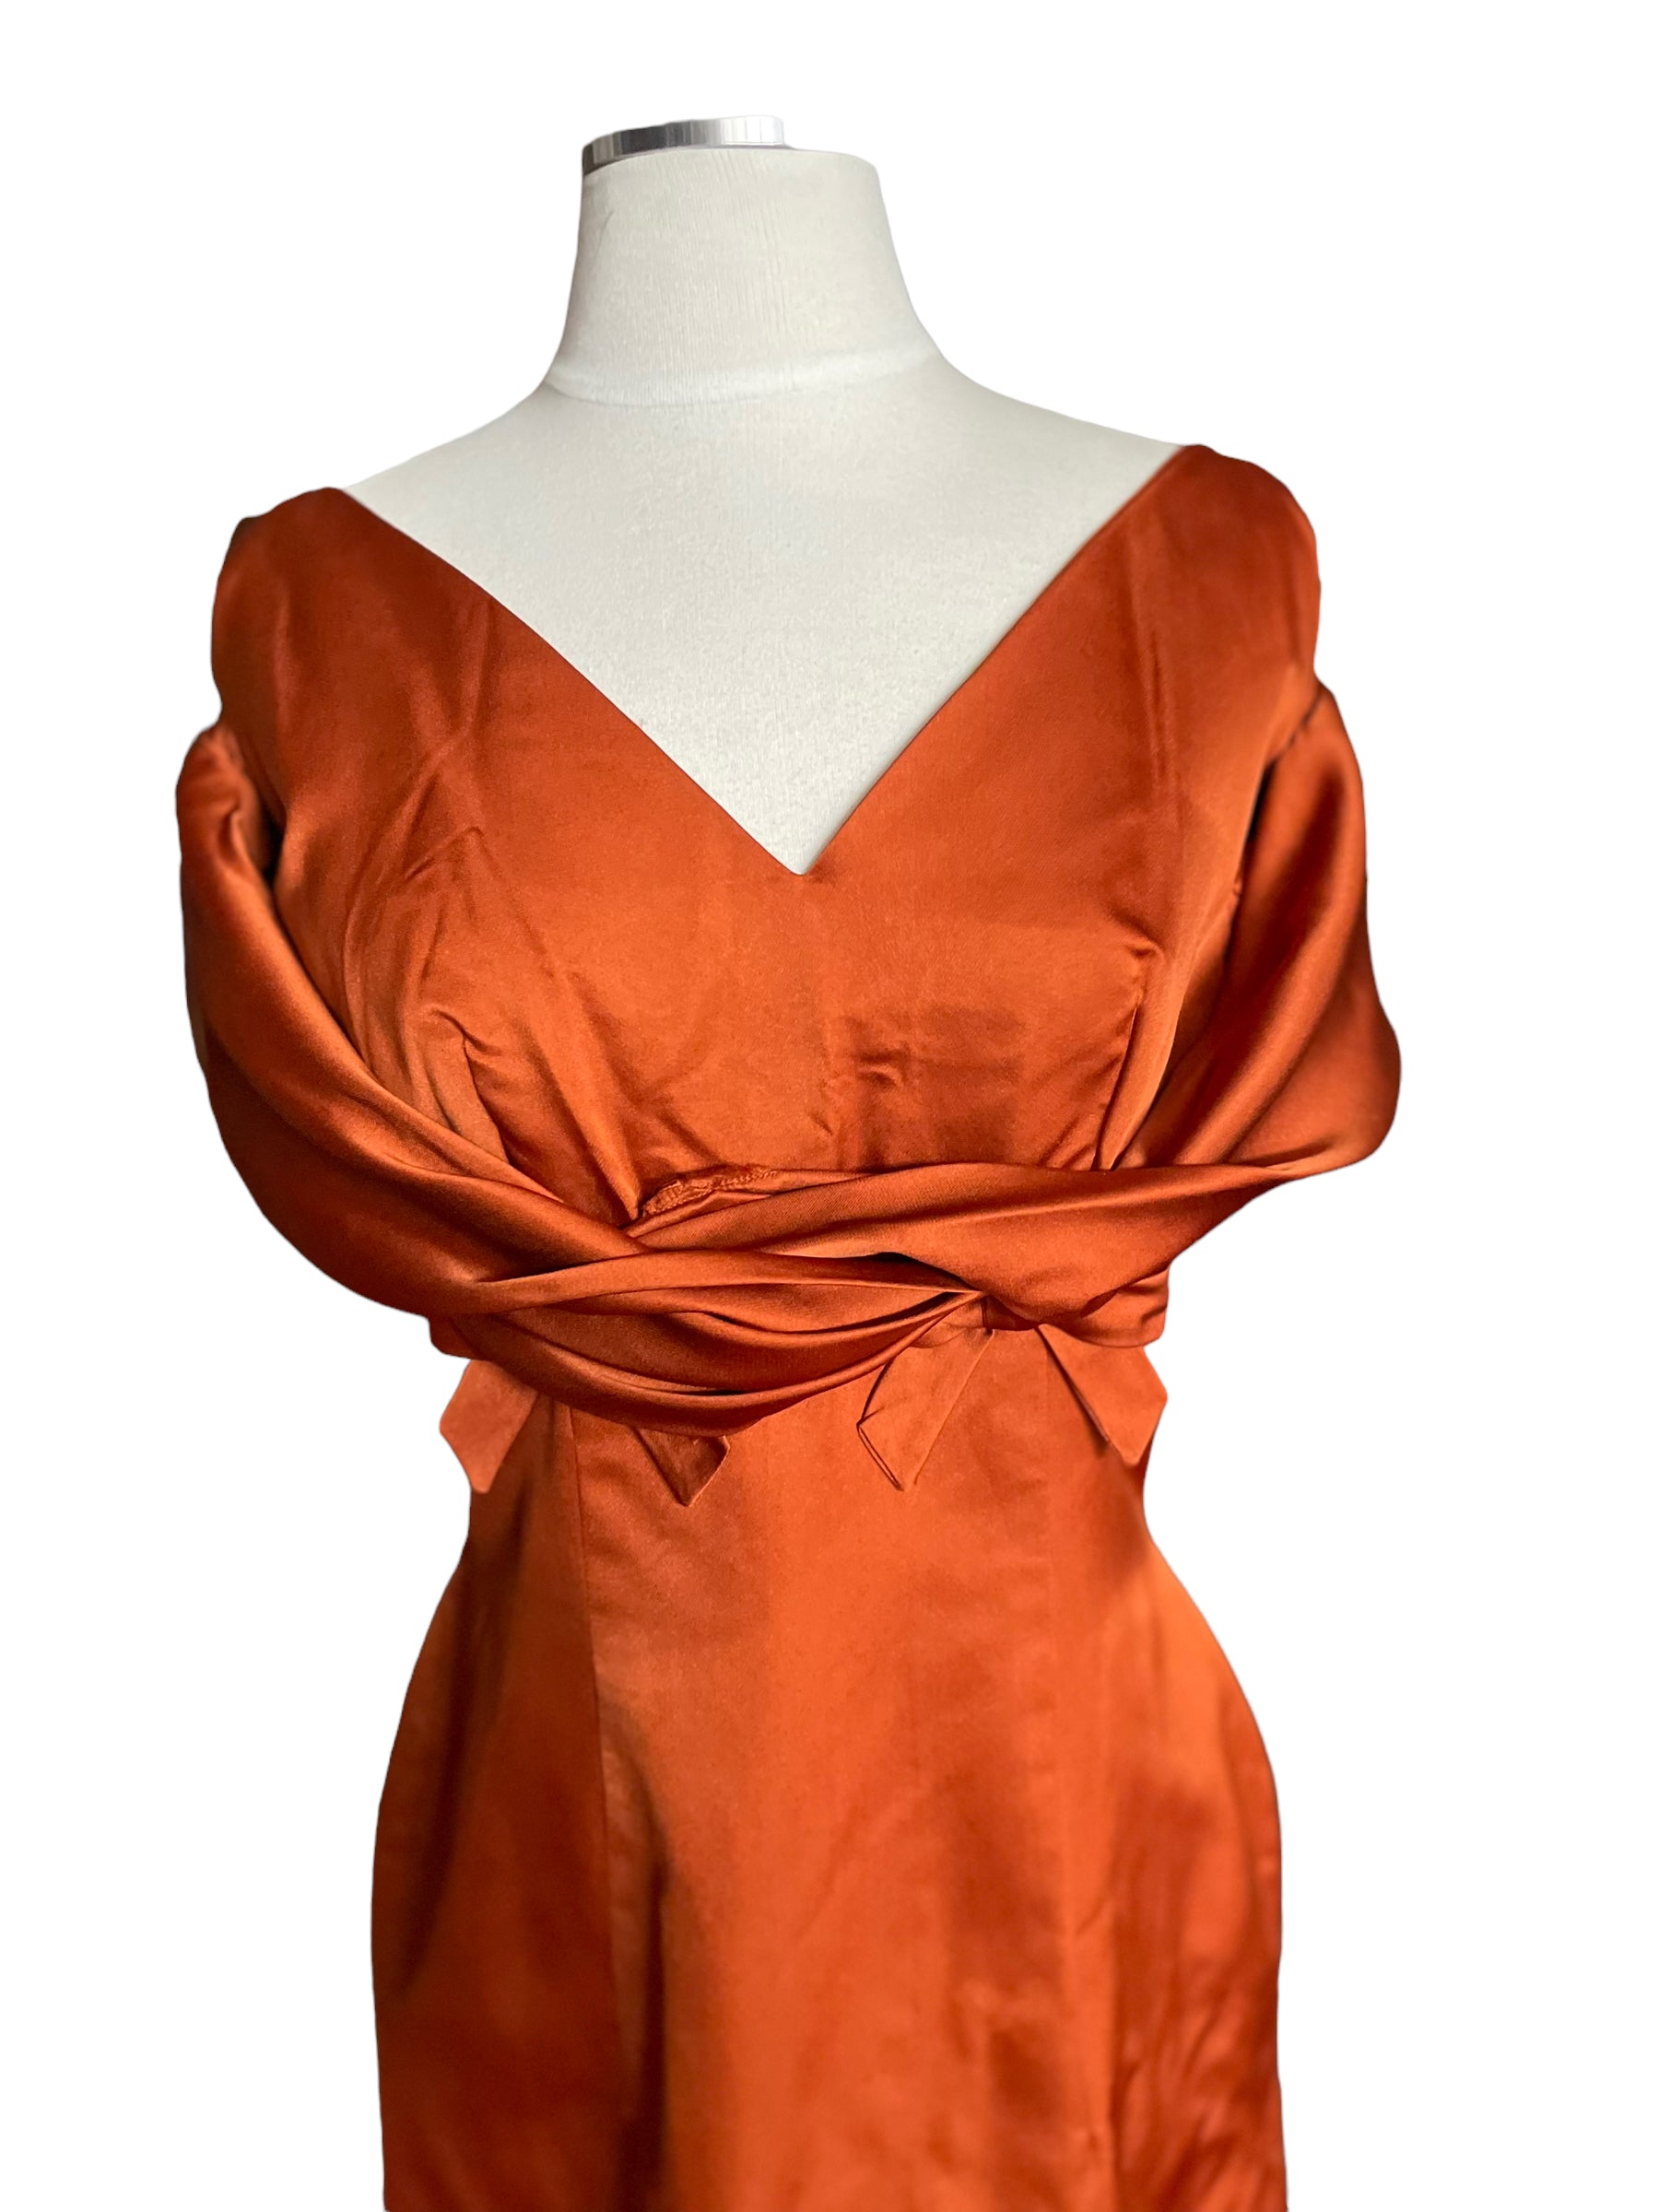 Top view of bodice under the collar Vintage 1950s Burnt Orange Silk Dress SZ M